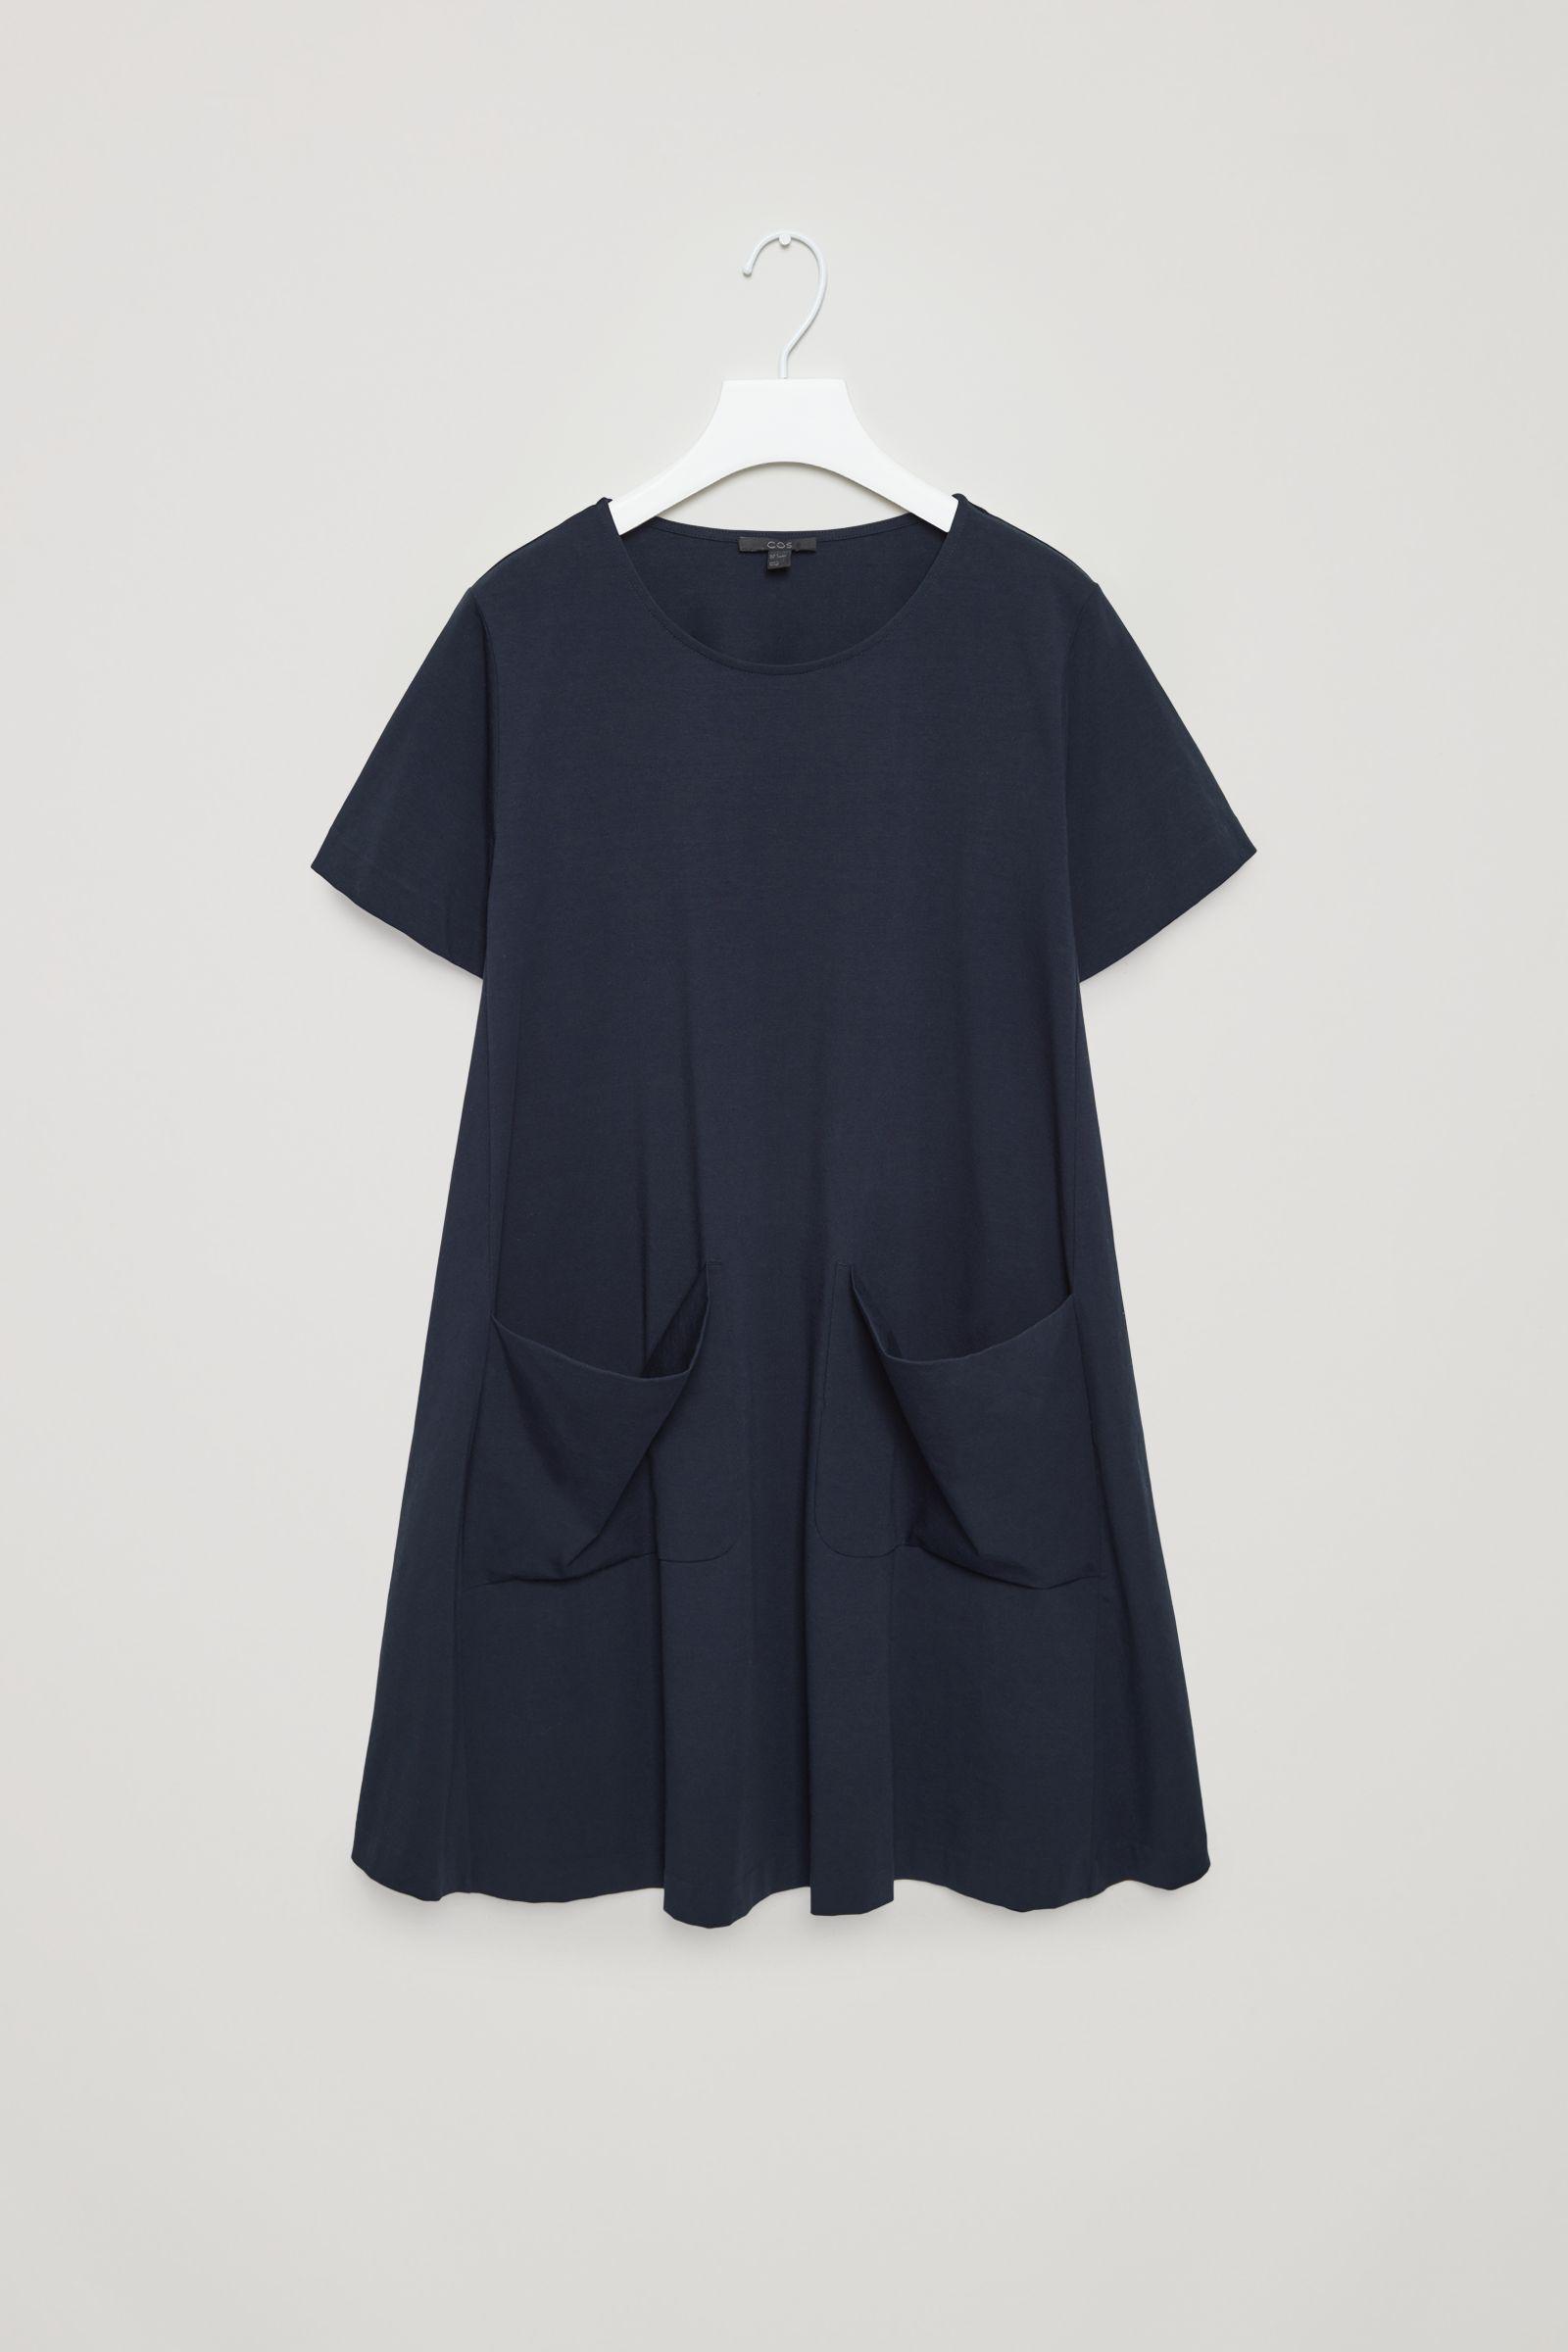 COS A-line Jersey Dress in Blue | Lyst